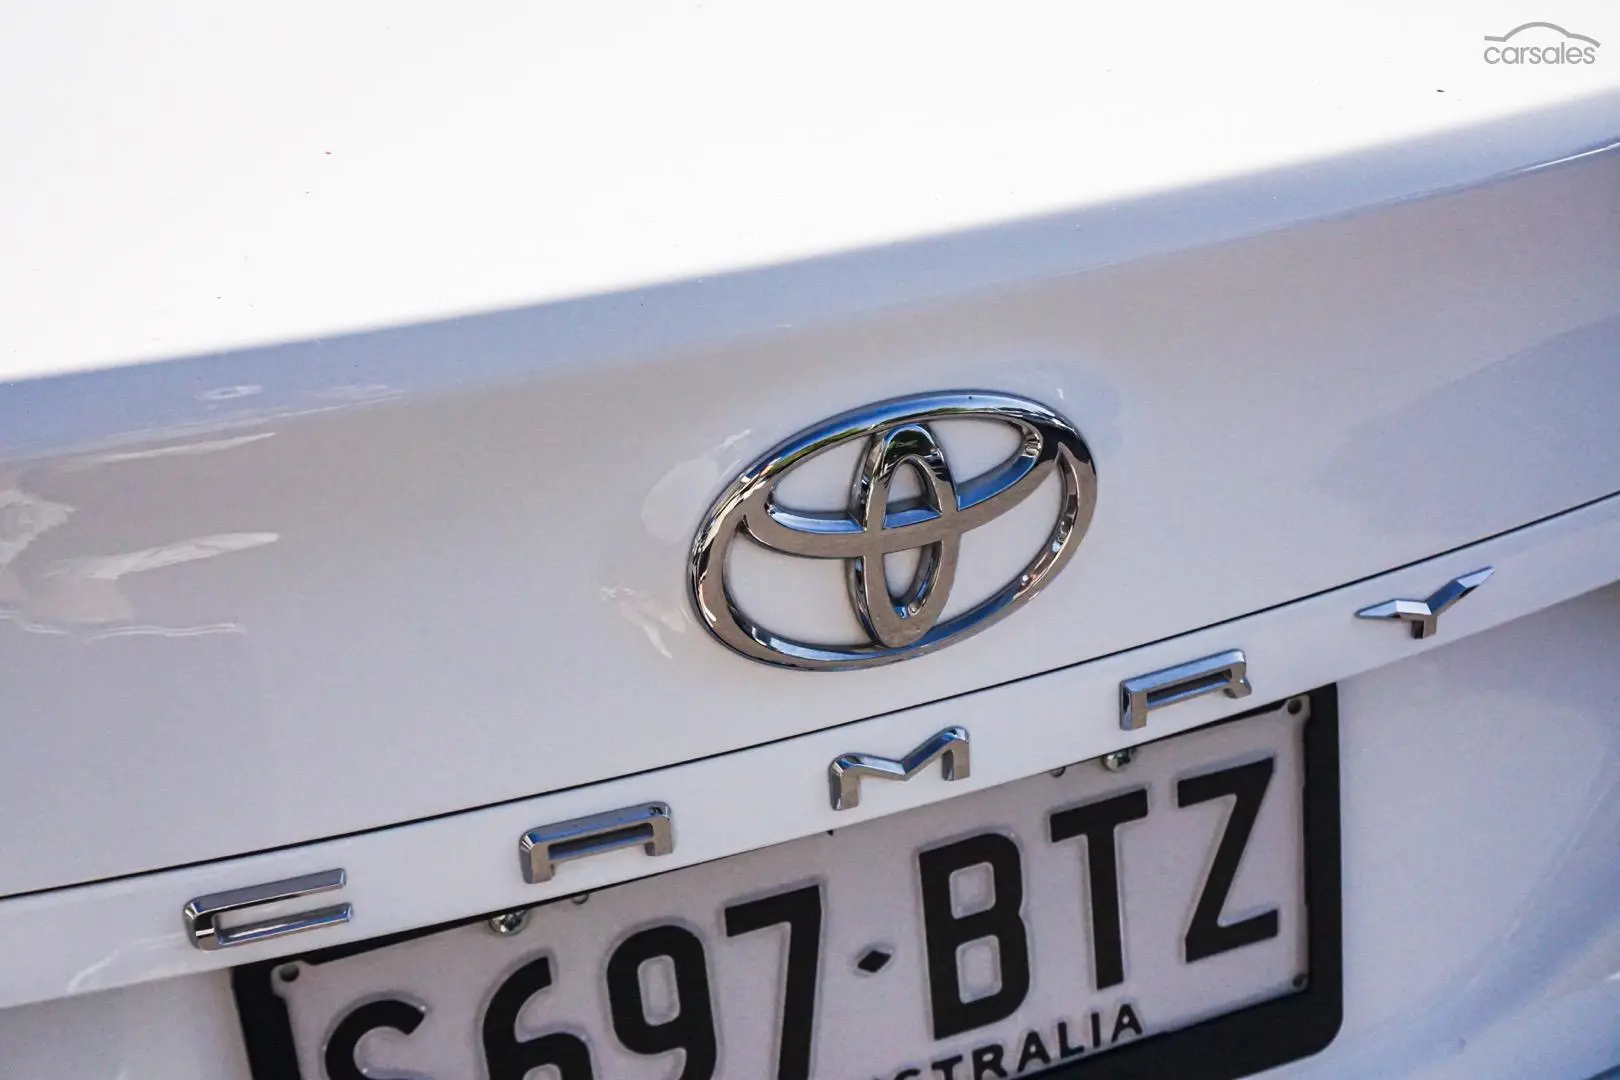 2018 Toyota Camry Image 15